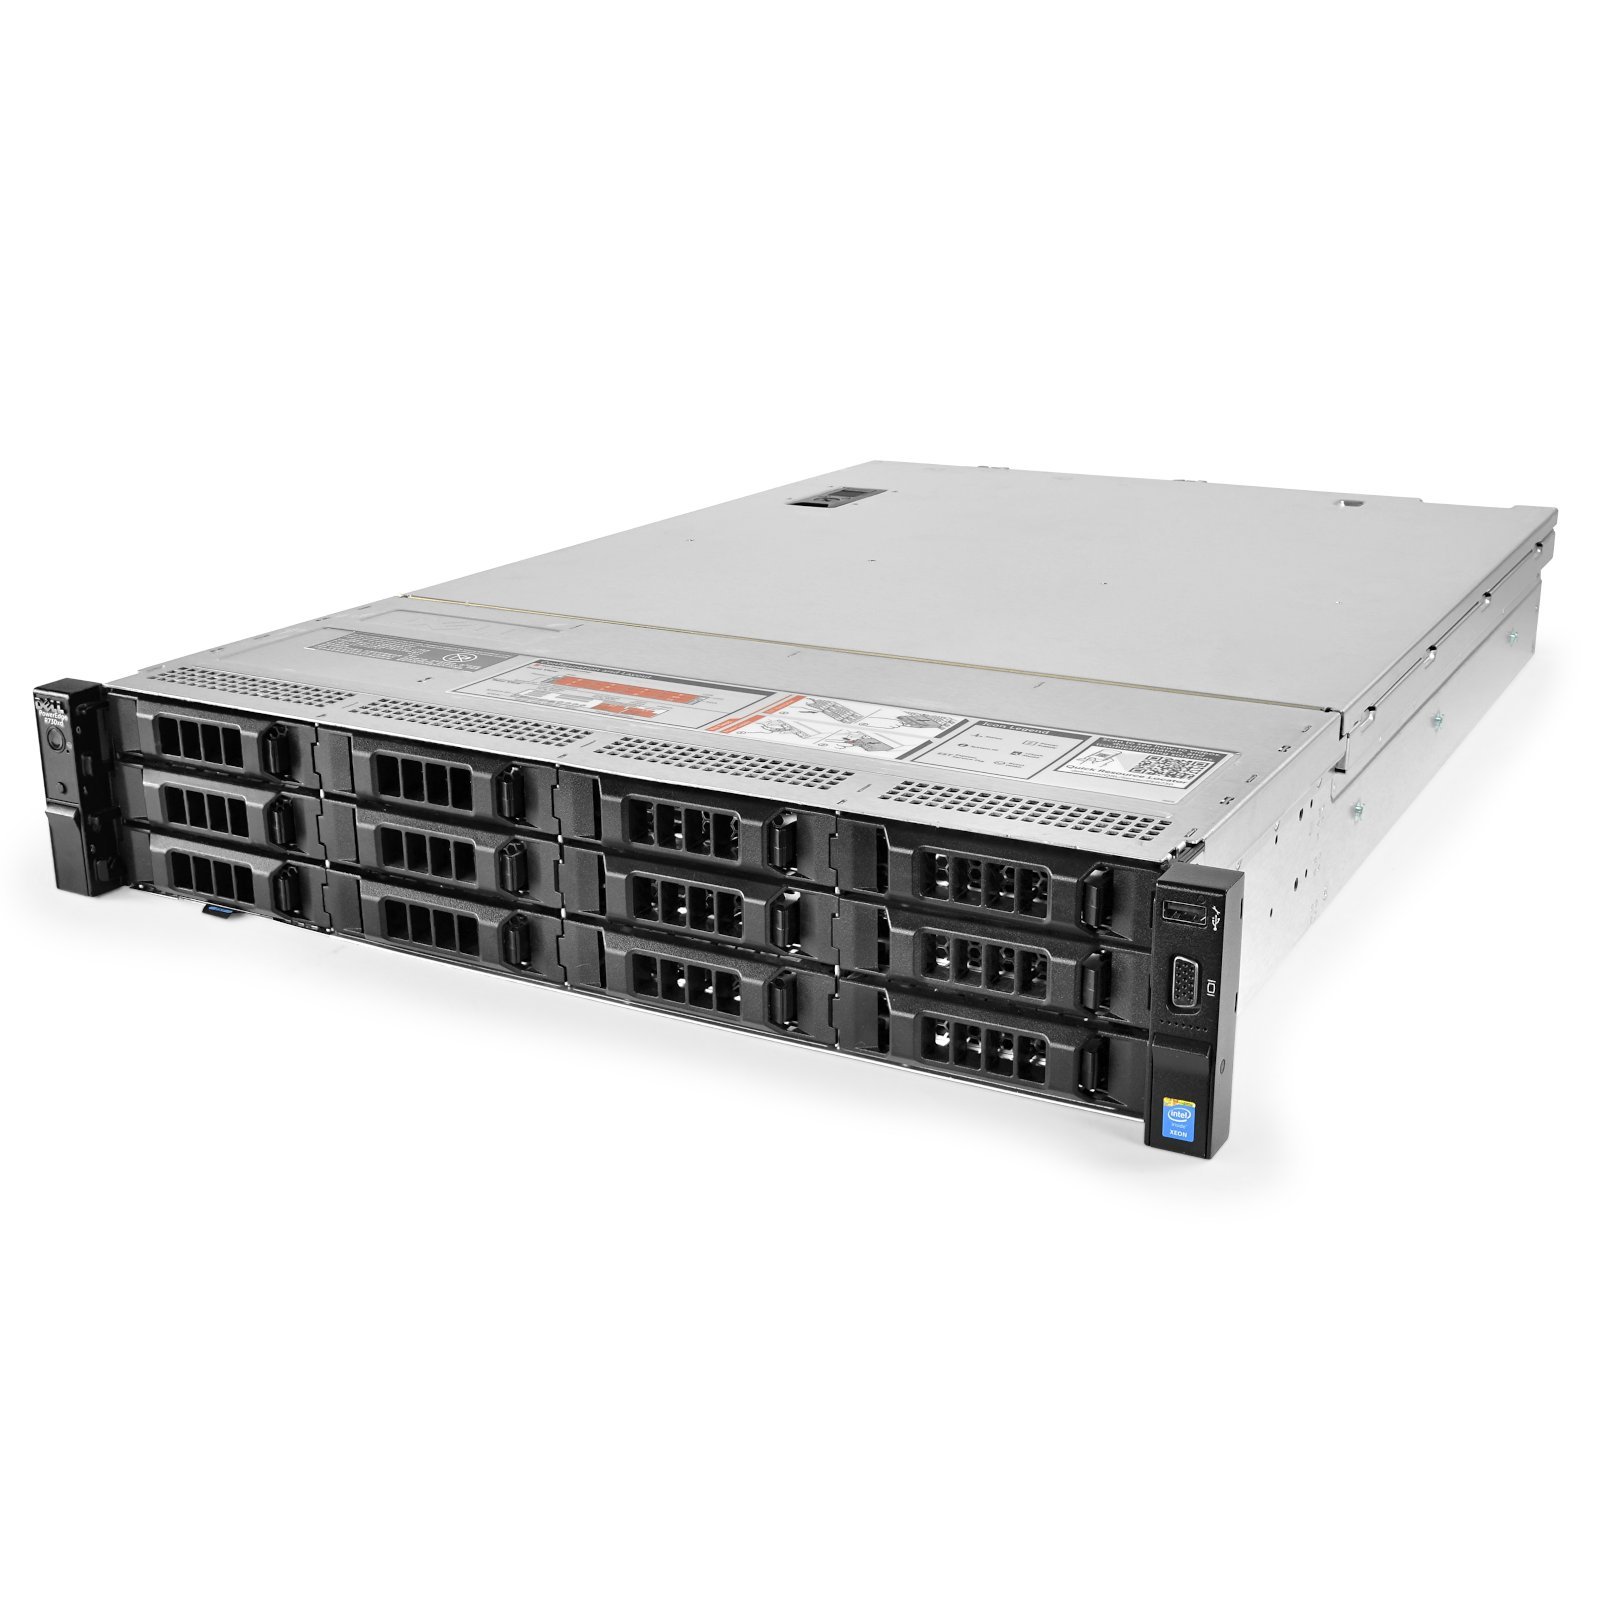 Подробное фото Сервер DELL PowerEdge R730XD Xeon 2x E5-2660v3 128Gb 2133P DDR4 12x noHDD 3.5", SAS RAID Perc H730 mini, 1024Mb, 2*PSU 750W